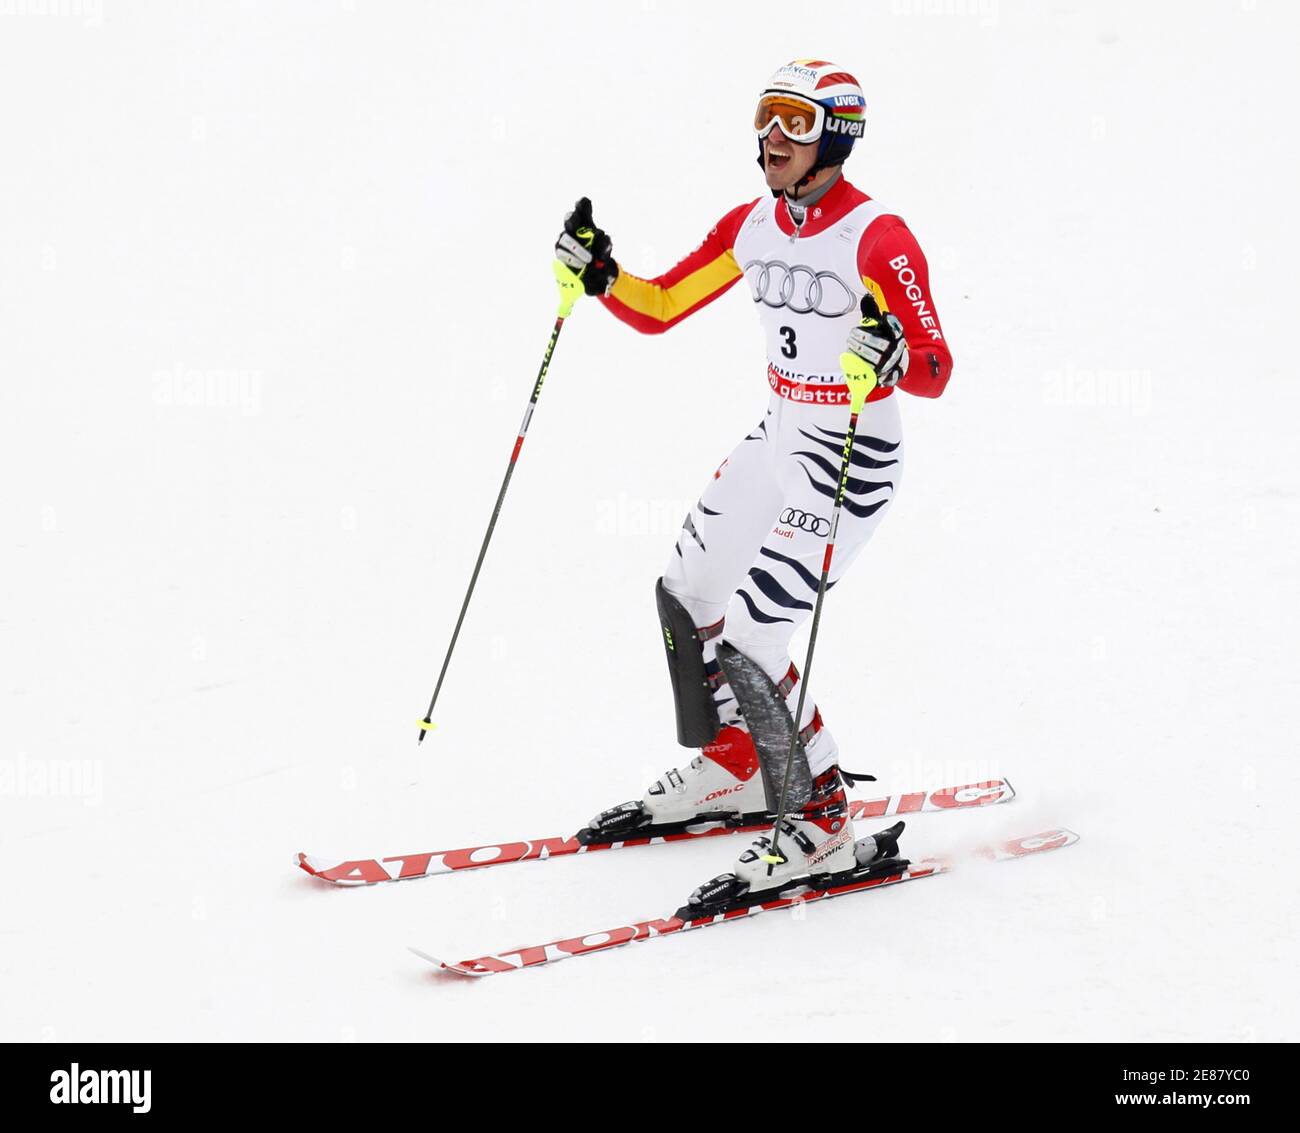 Felix Neureuther of Germany celebrates winning the men's Alpine Skiing World Cup Slalom in Garmisch-Partenkirchen March 13, 2010. REUTERS/Miro Kuzmanovic (GERMANY - Tags: SPORT SKIING) Foto de stock